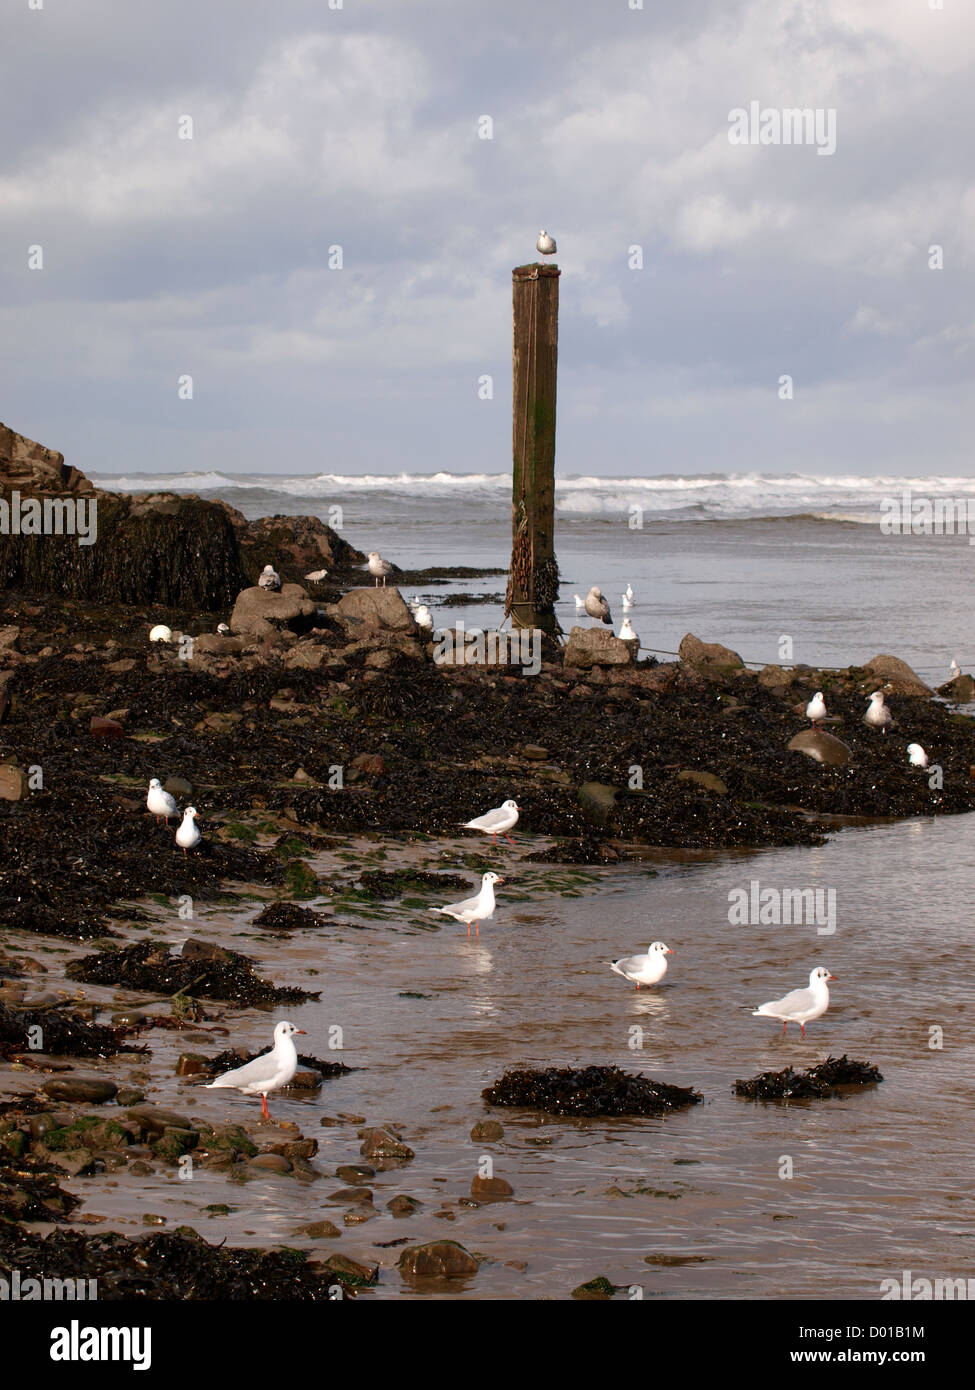 Seagulls and seaweed, Cornwall, UK Stock Photo